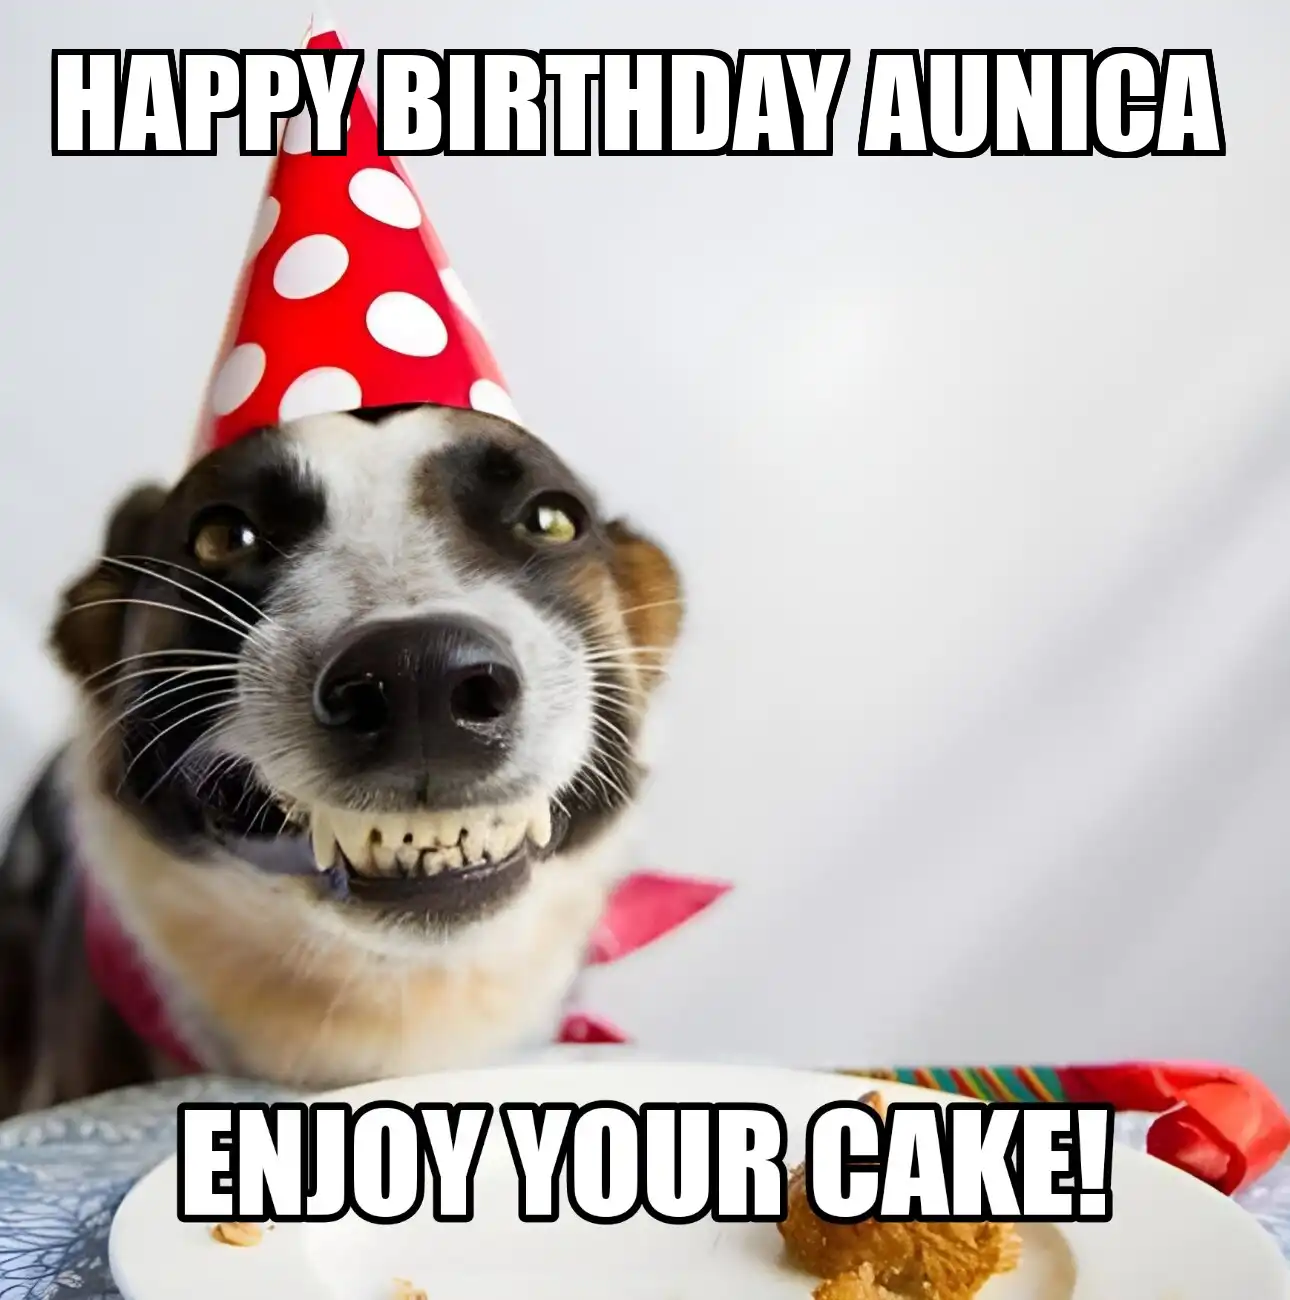 Happy Birthday Aunica Enjoy Your Cake Dog Meme